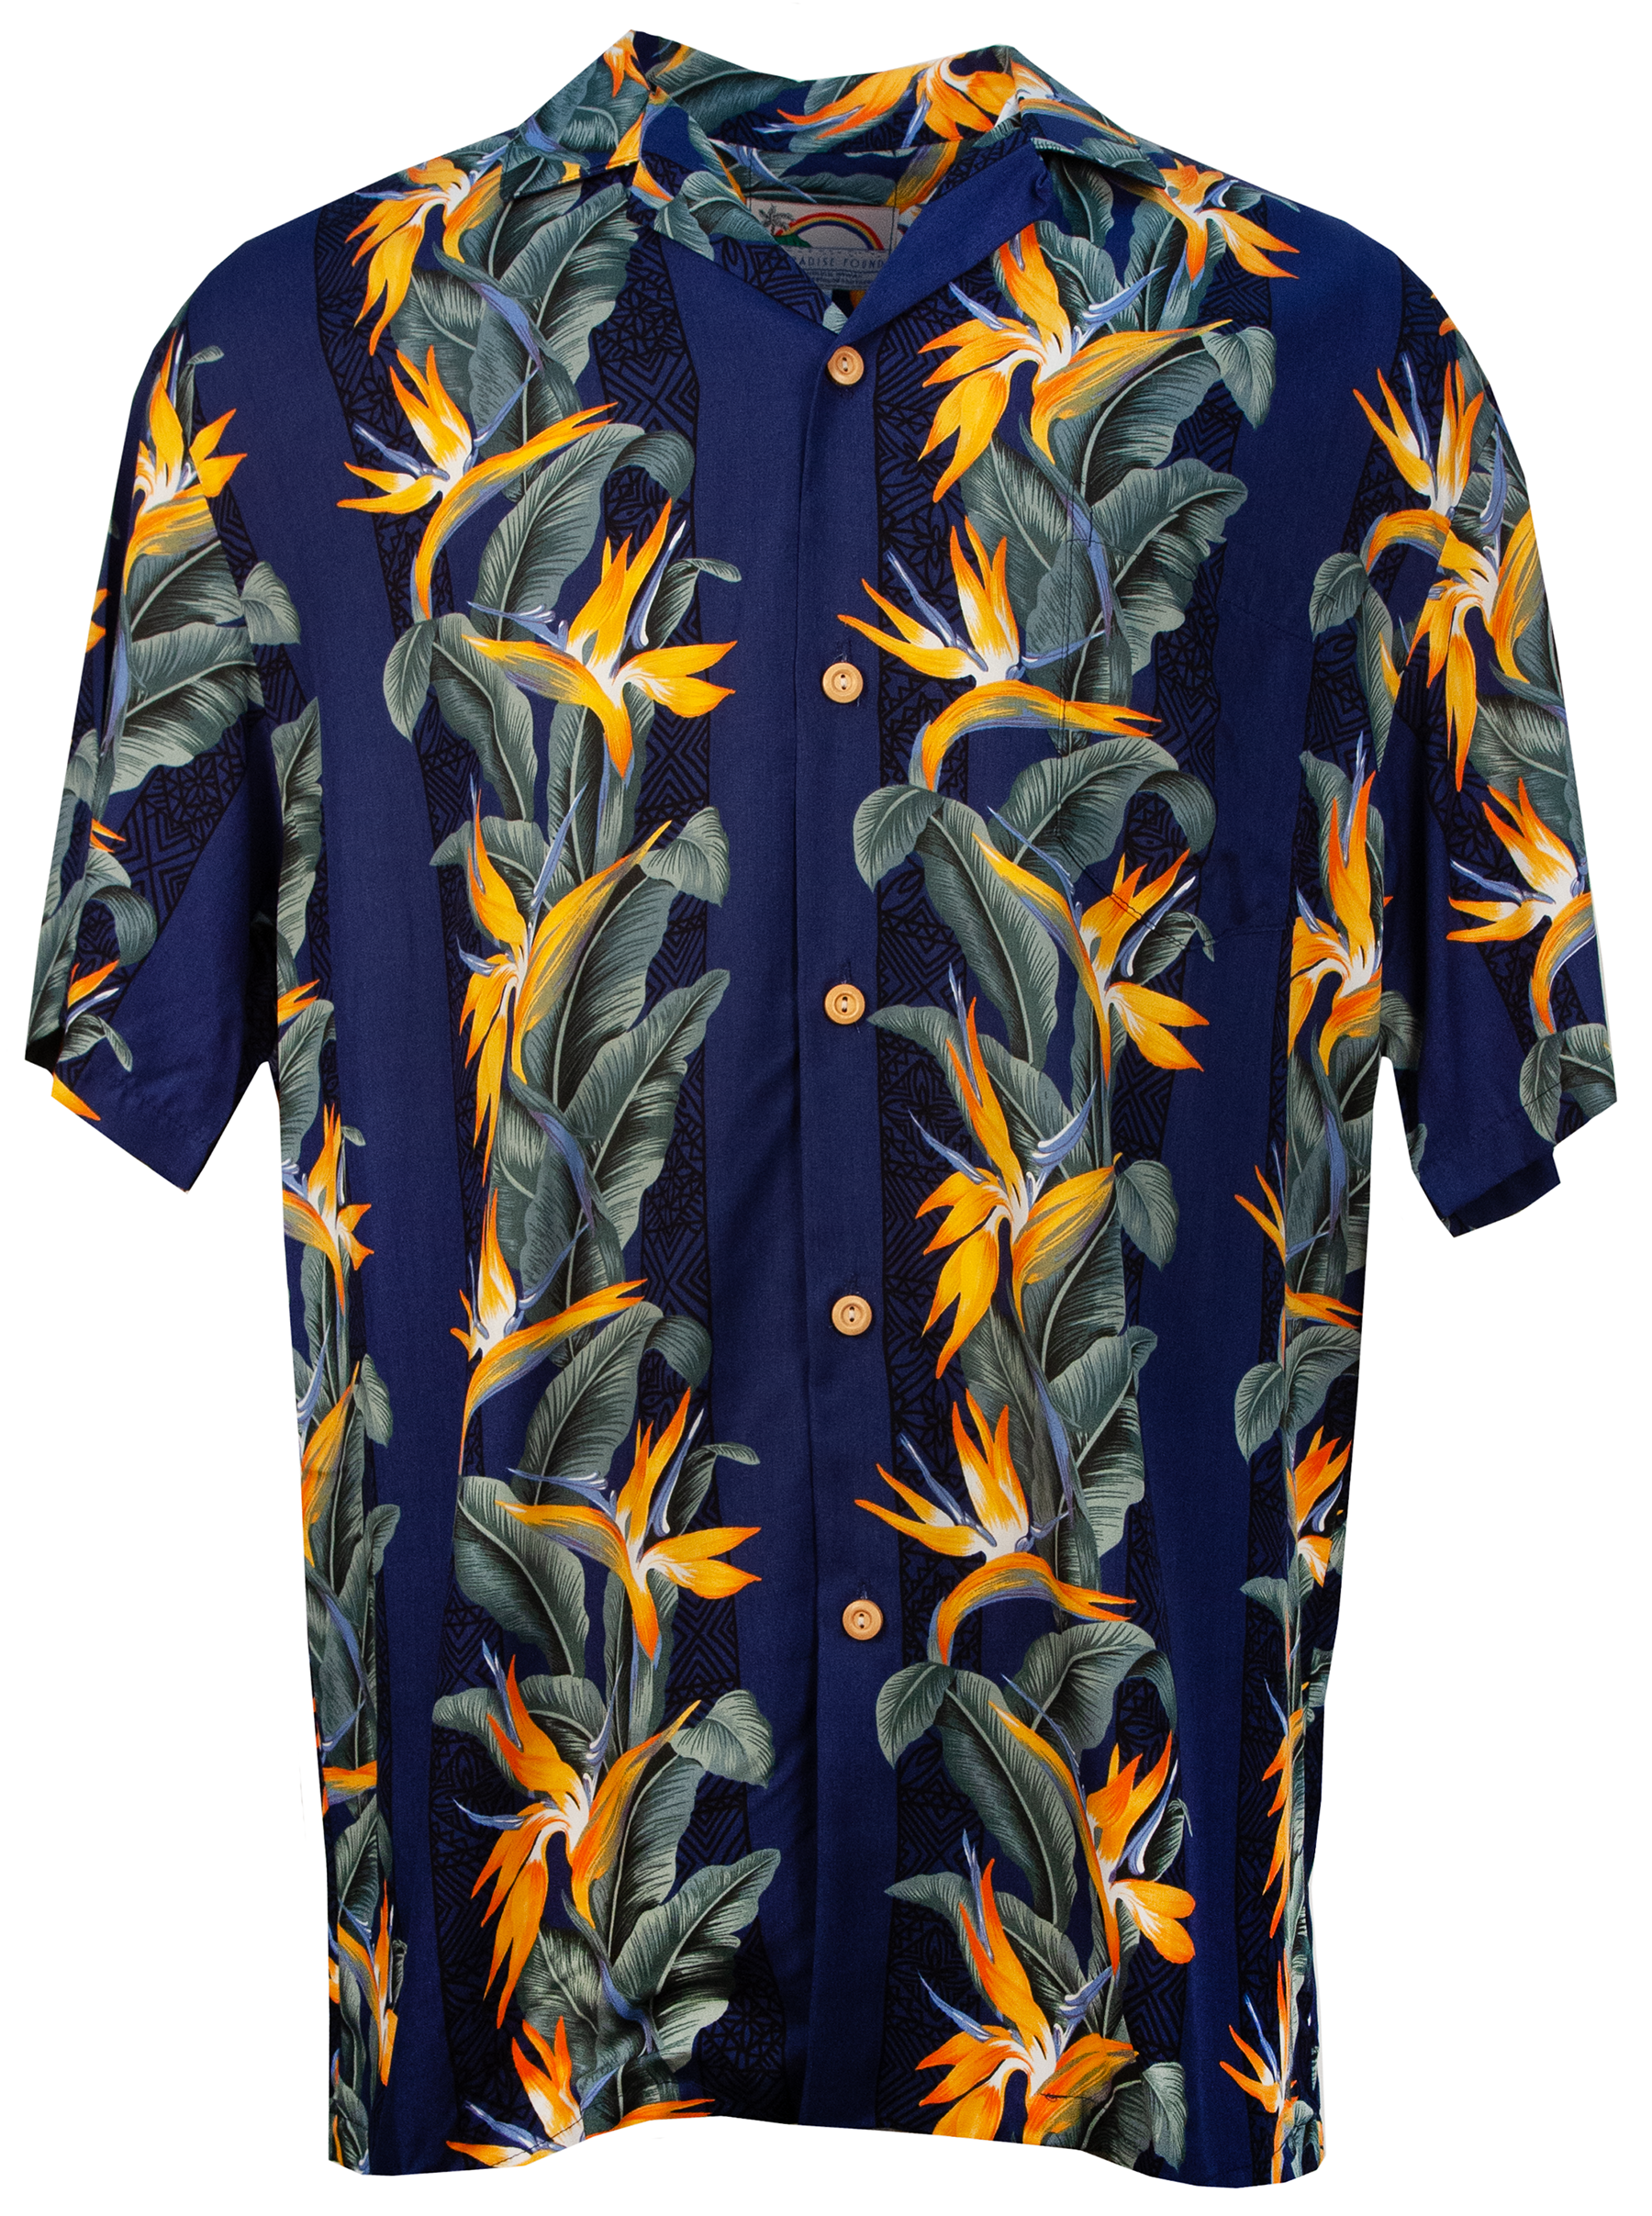 Pittsburgh Pirates Hawaiian Shirt Since 1887 Gift - Jomagift